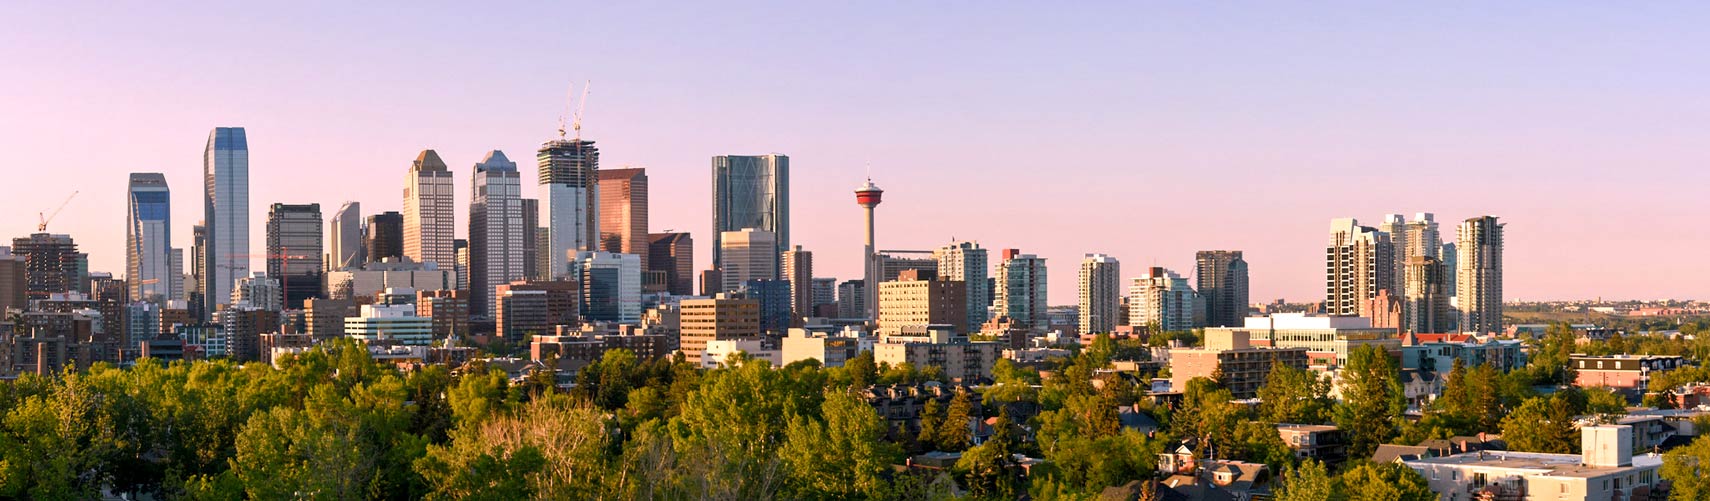 Panorama of Calgary's skyline